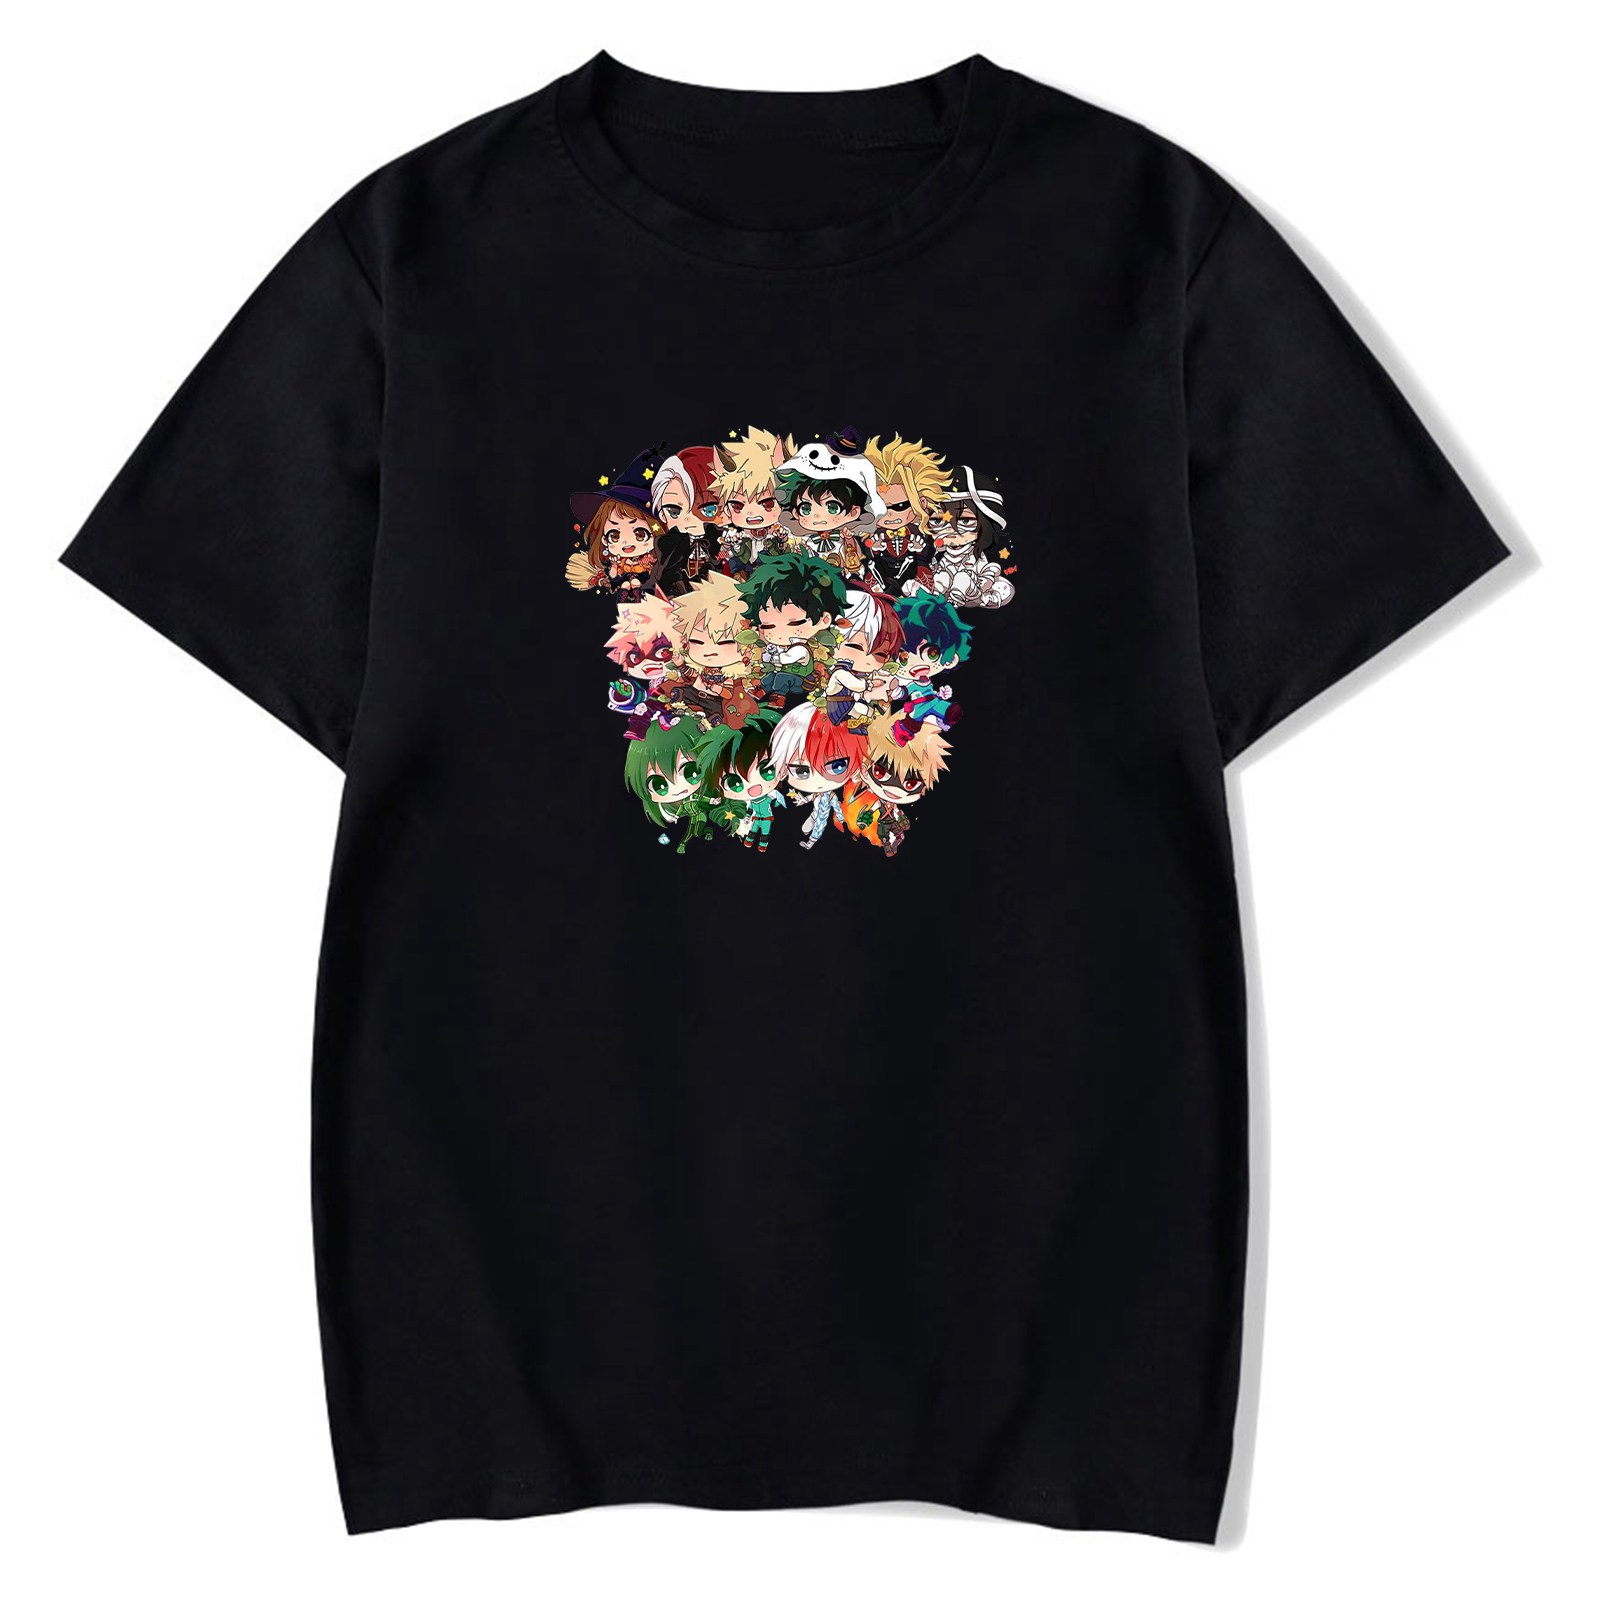 SOSPIRO Unisex My Hero Academia T Shirts Midoriya Bakugo Cosplay with Baseball Cap Sun Hat & 50pcs Anime Academia Stickers Gifts Set(Black-L) - image 4 of 7